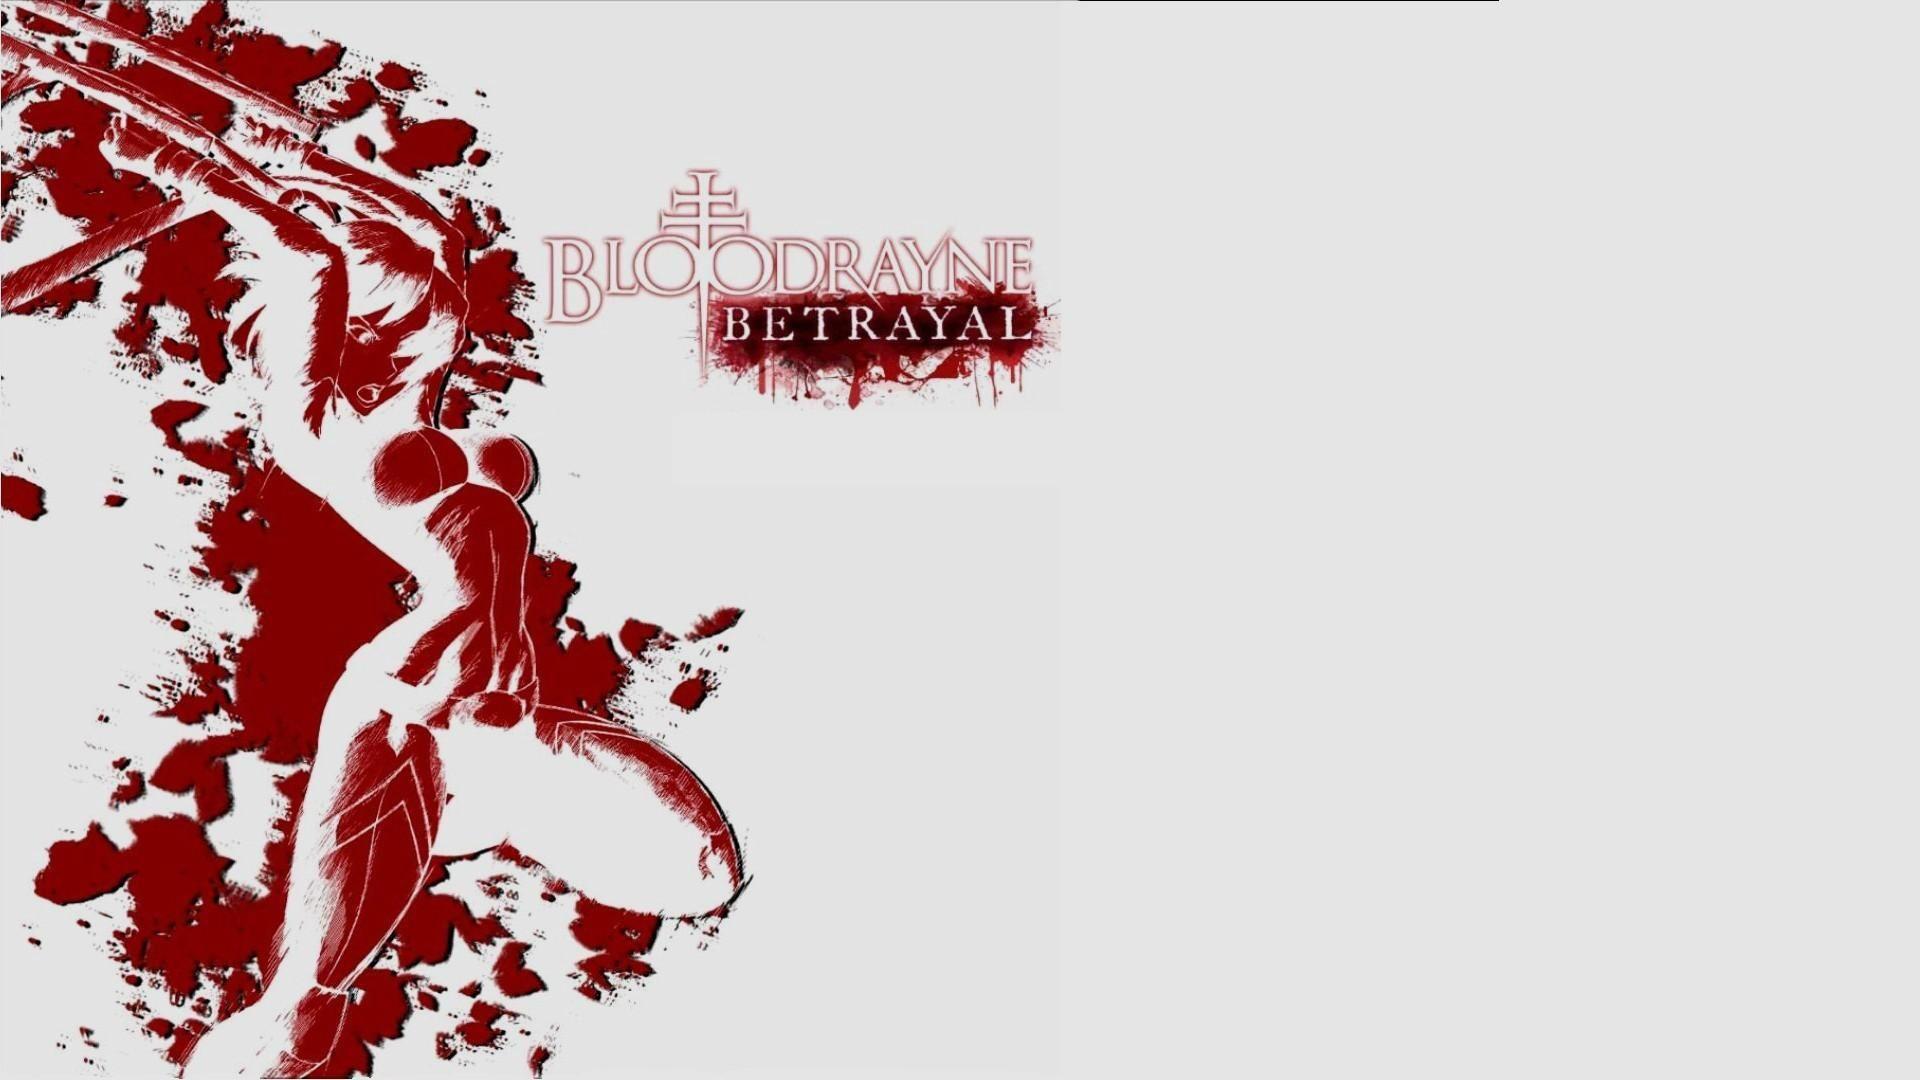 Bloodrayne: betrayal bloodrayne video games white background